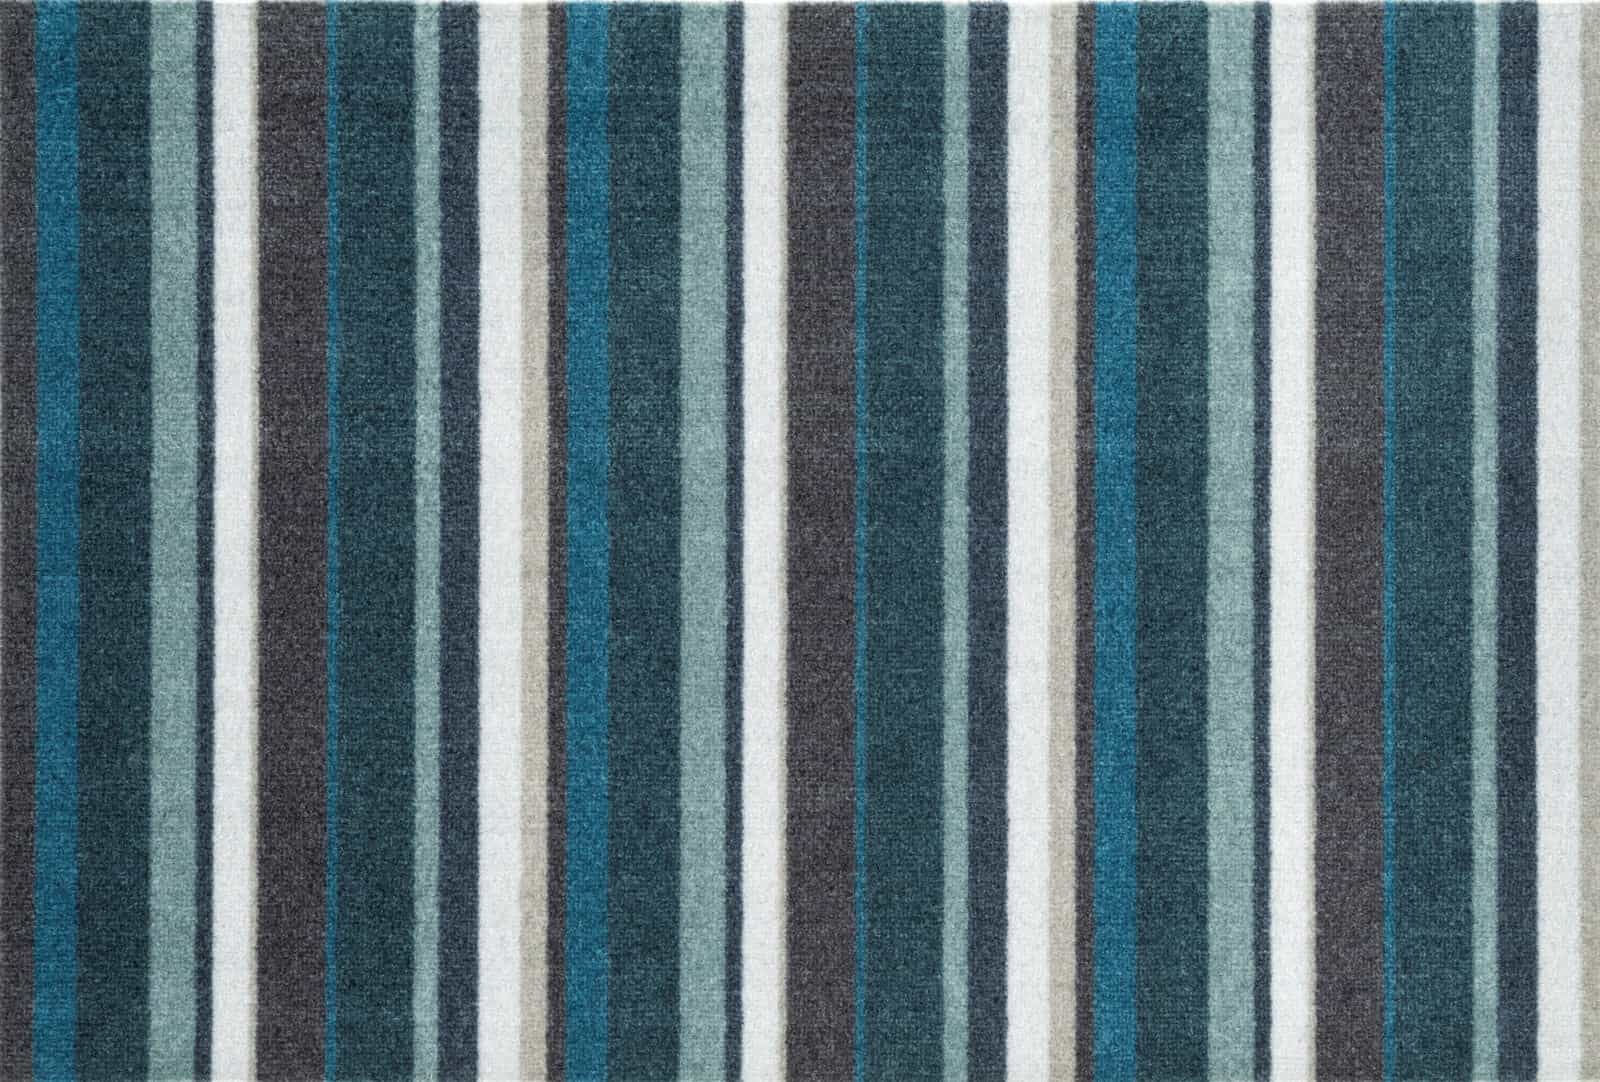 Dandy Likewise Washamat RECYLON Teal Stripe Mat 120 x 67cm